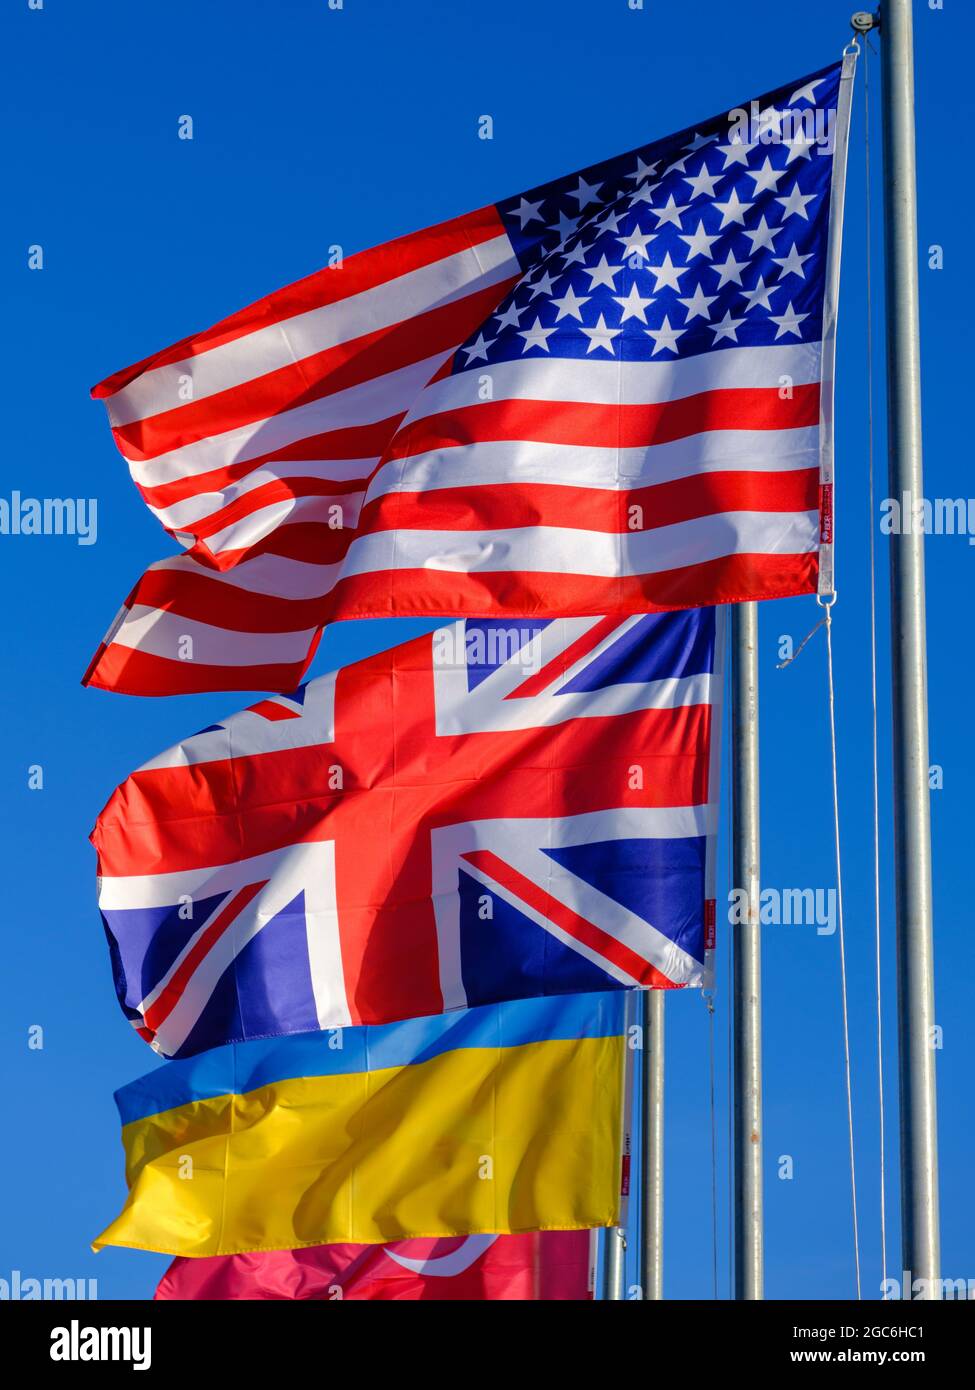 United States of America flag and United Kingdom flag Stock Photo